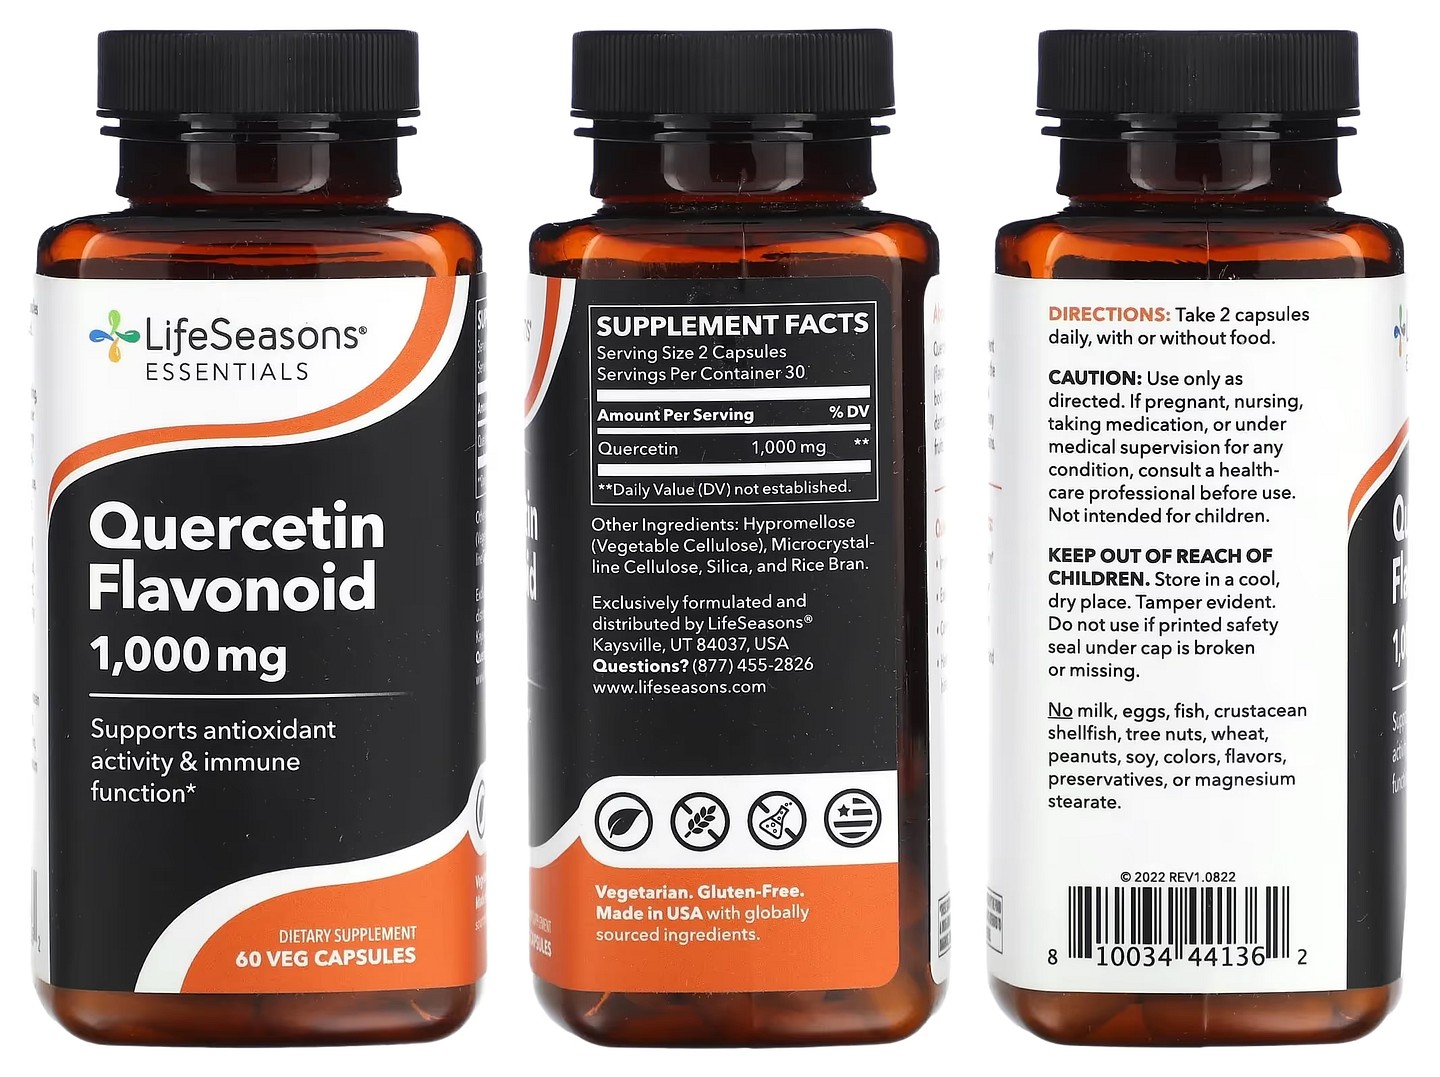 LifeSeasons, Quercetin Flavonoid packaging